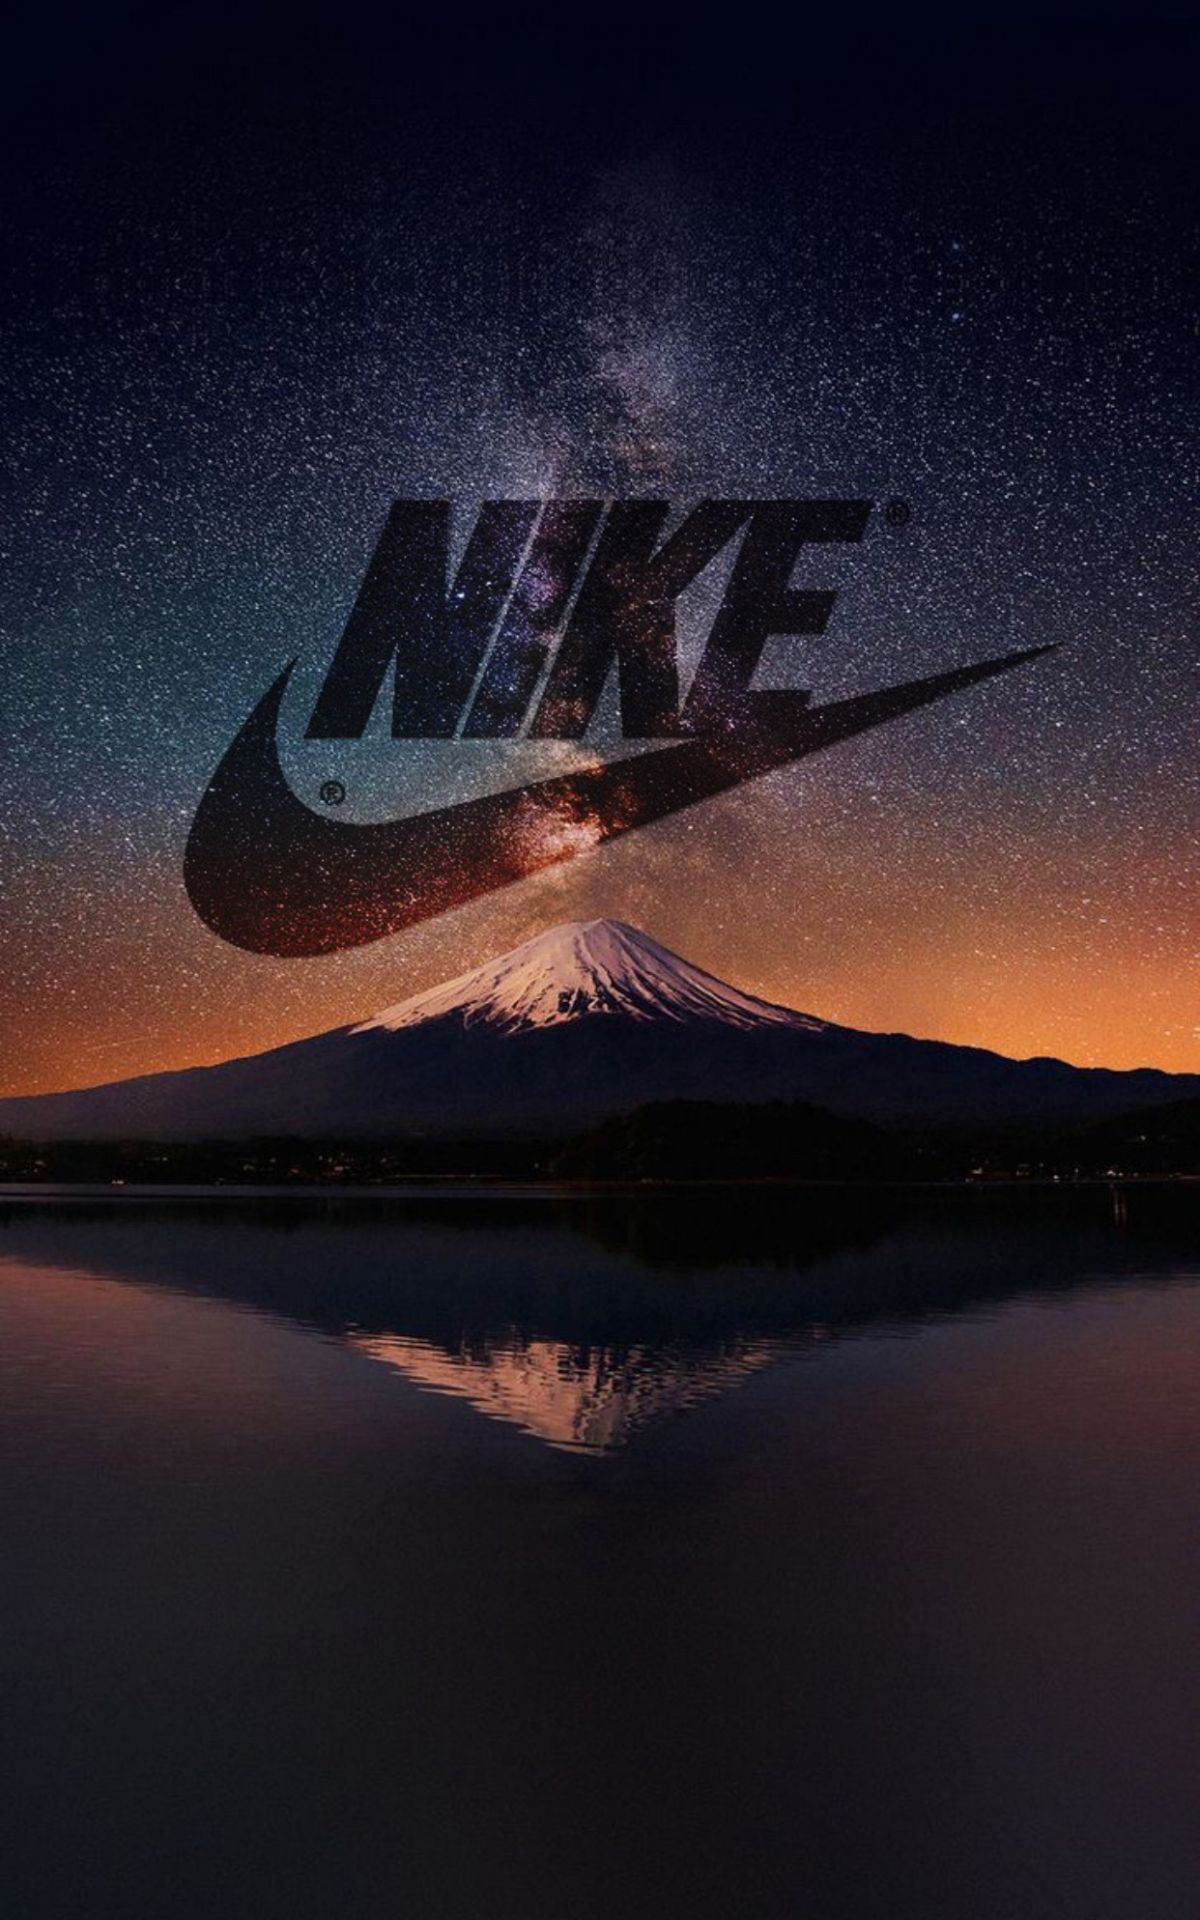 Nike Wallpaper 4K